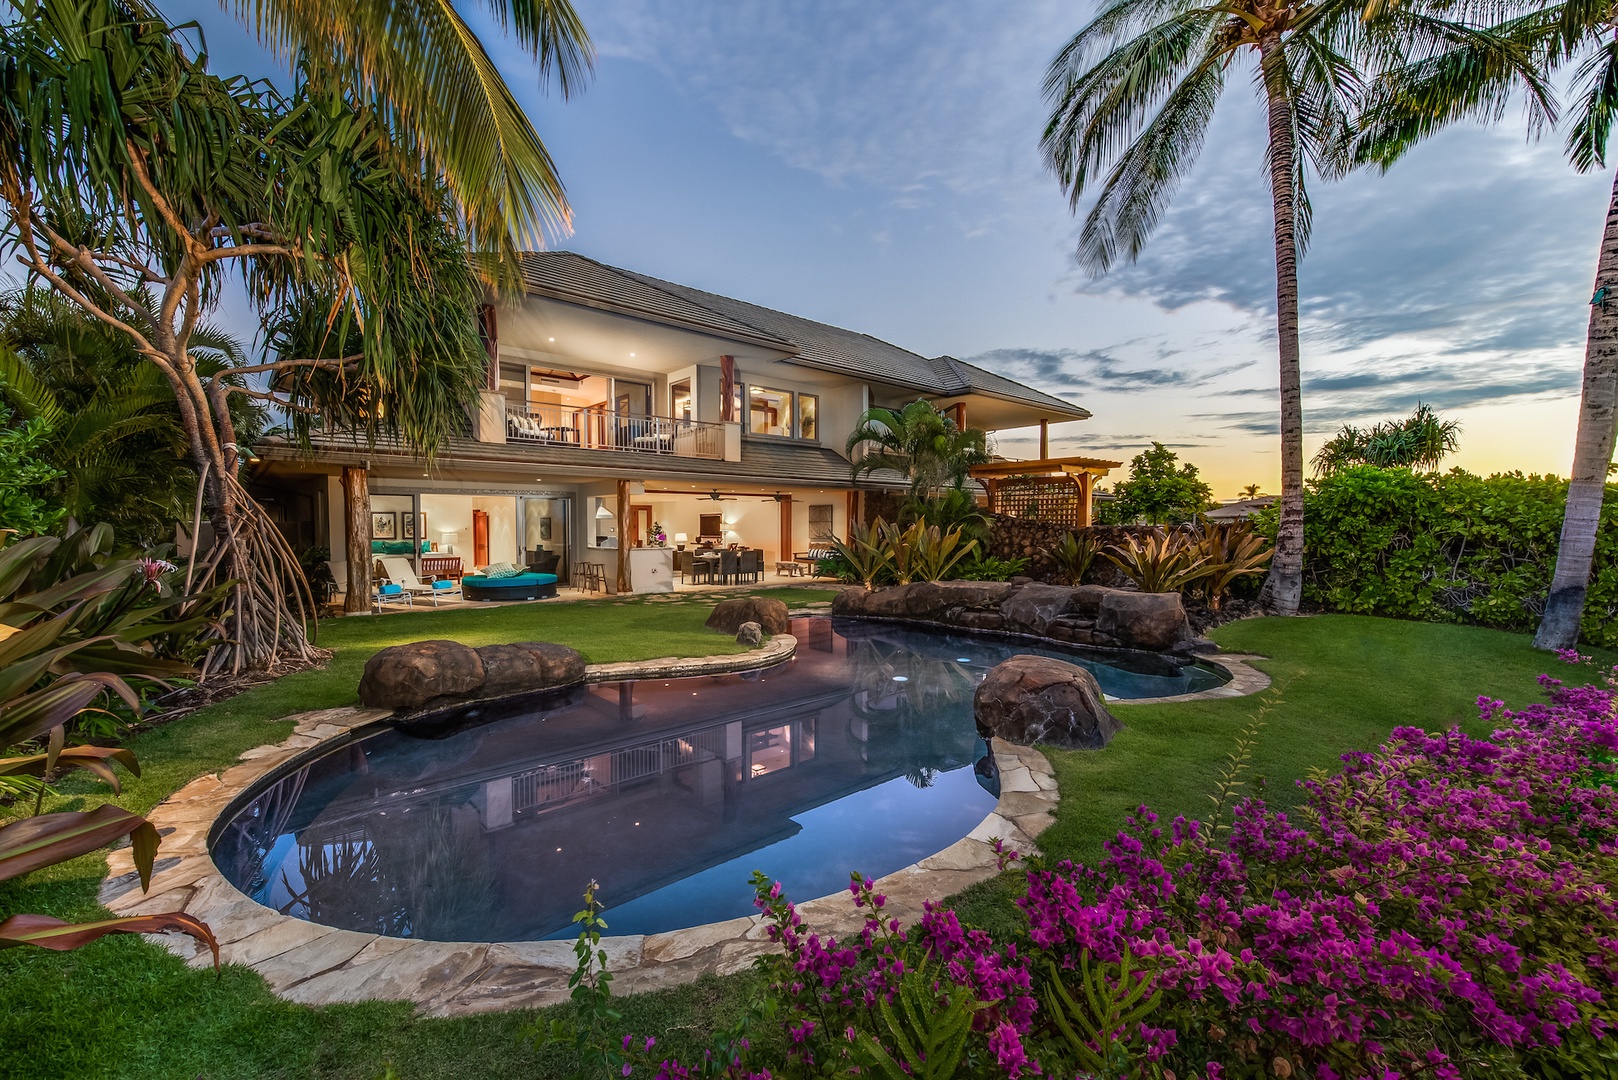 Kamuela Vacation Rentals, 3BD OneOcean (1C) at Mauna Lani Resort - Your Lush & Private Tropical Oasis Awaits!